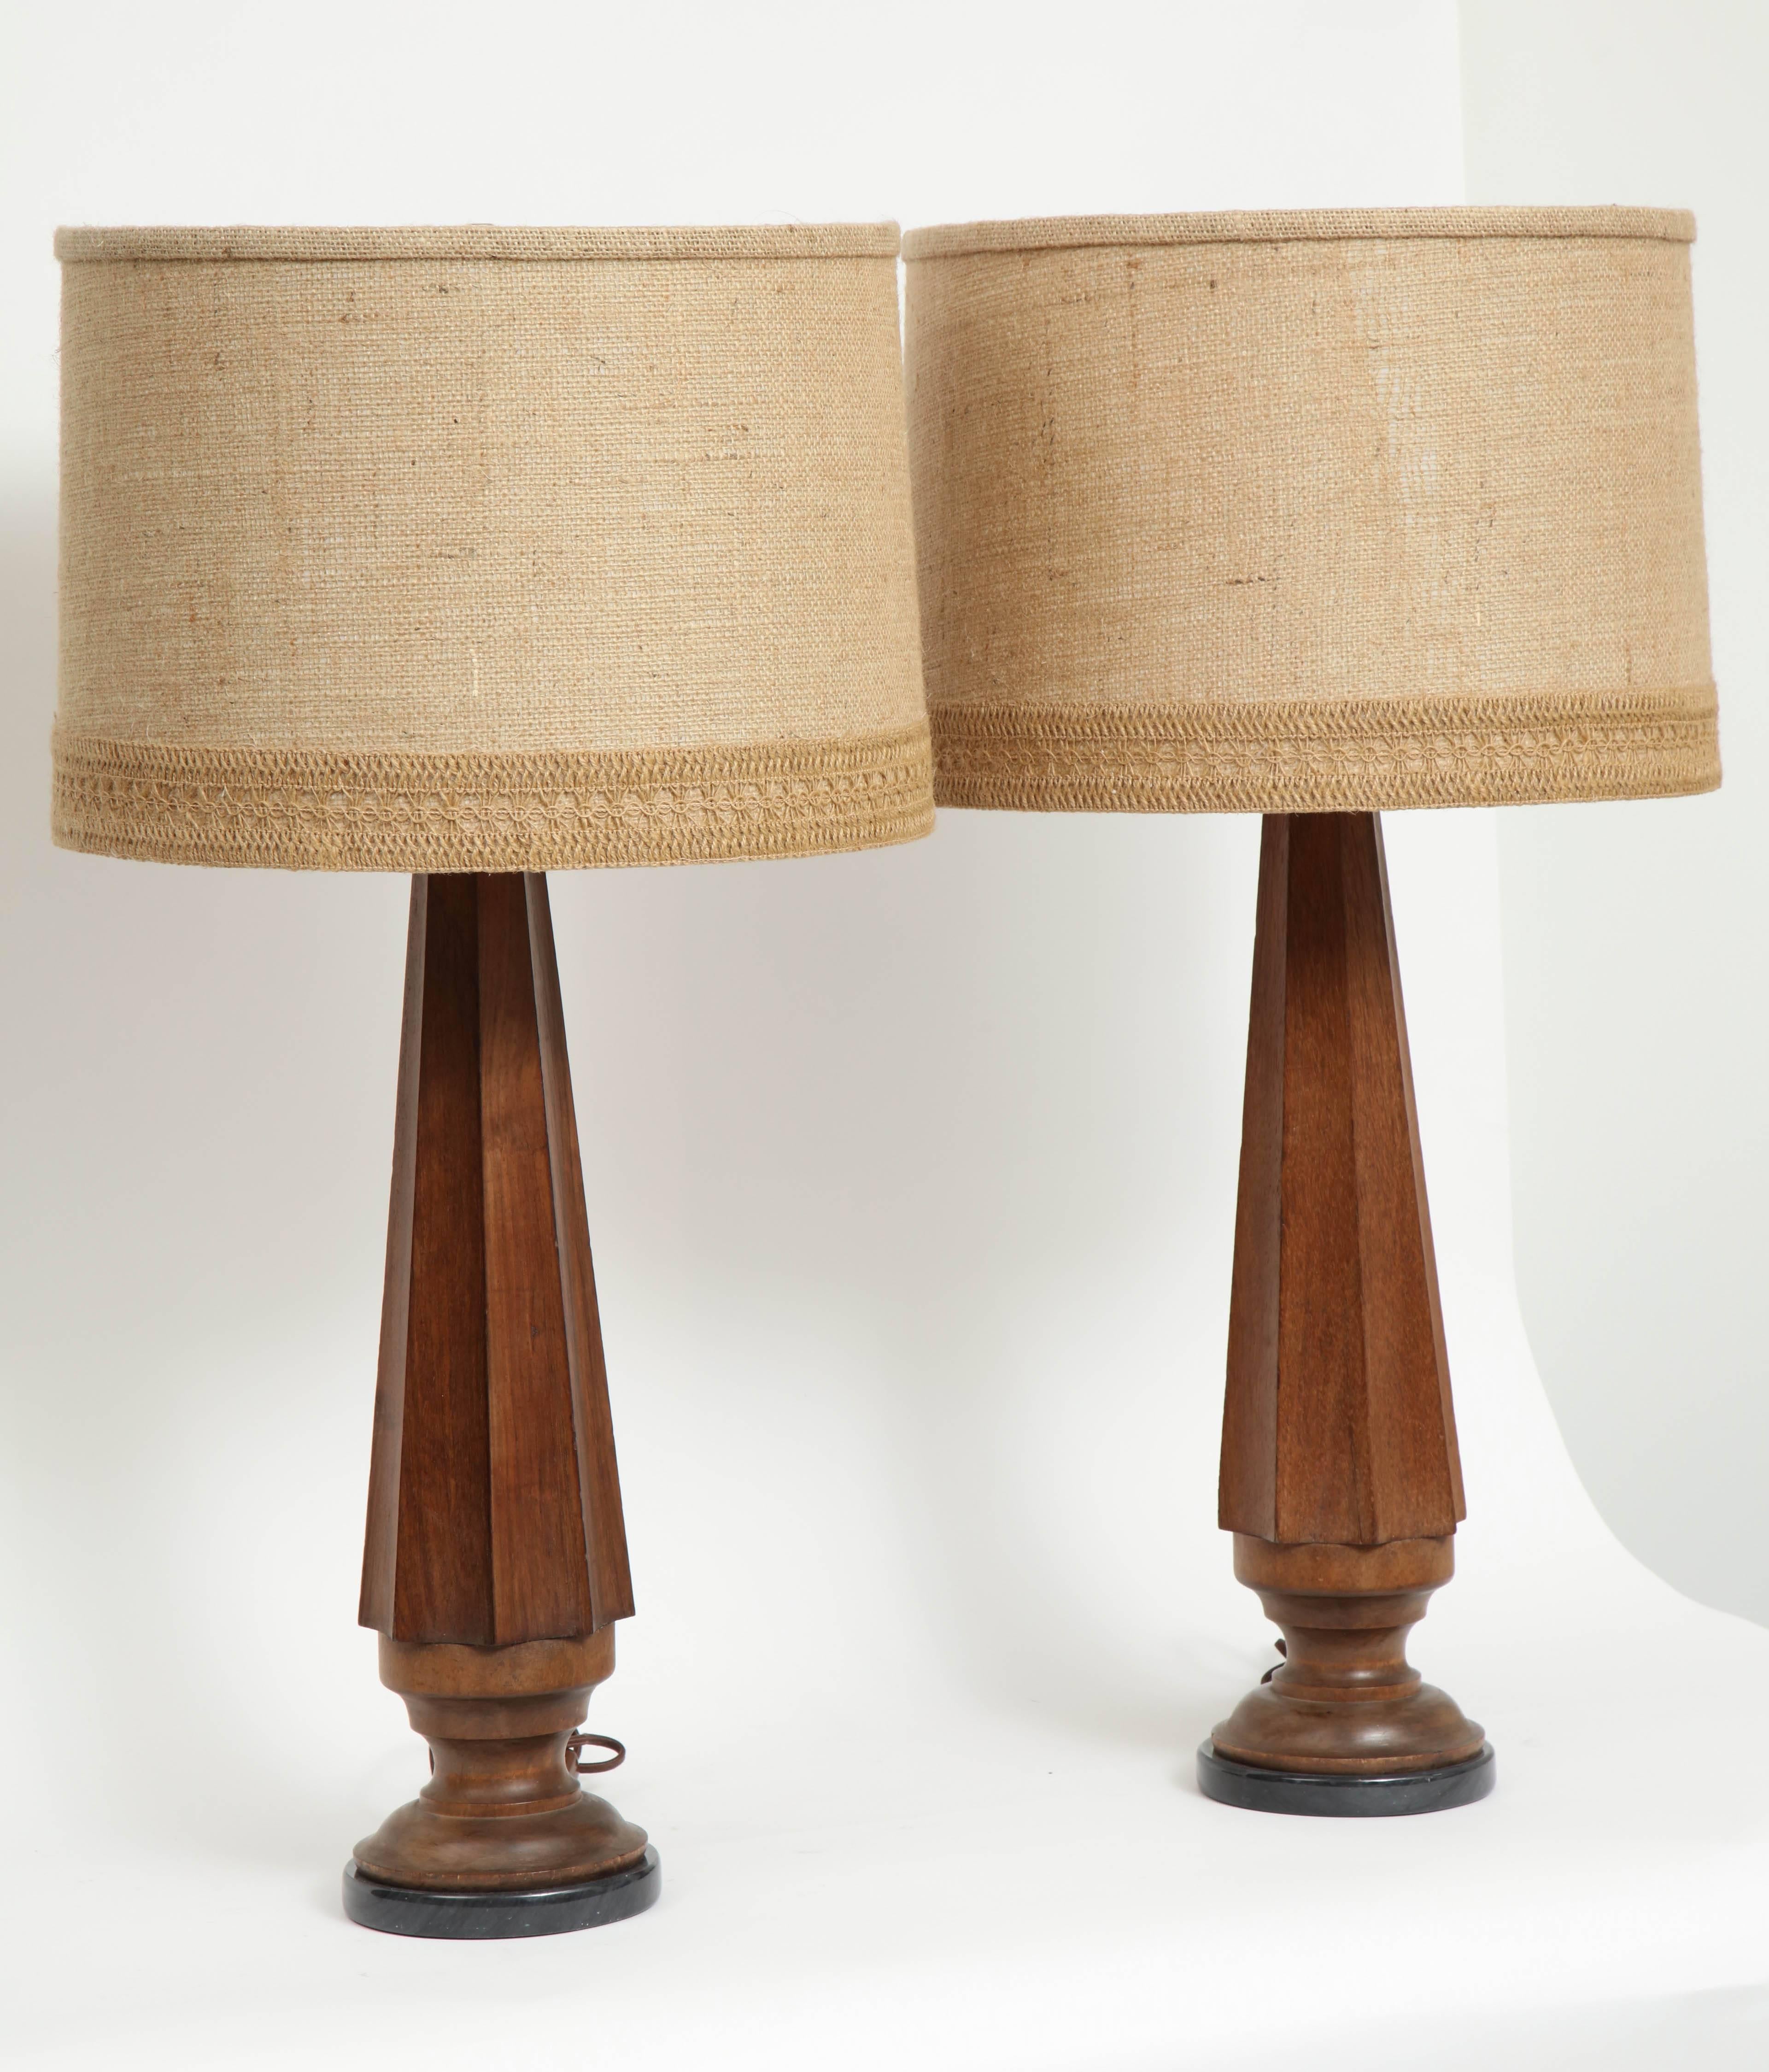 Pair of antique wood column lamps.